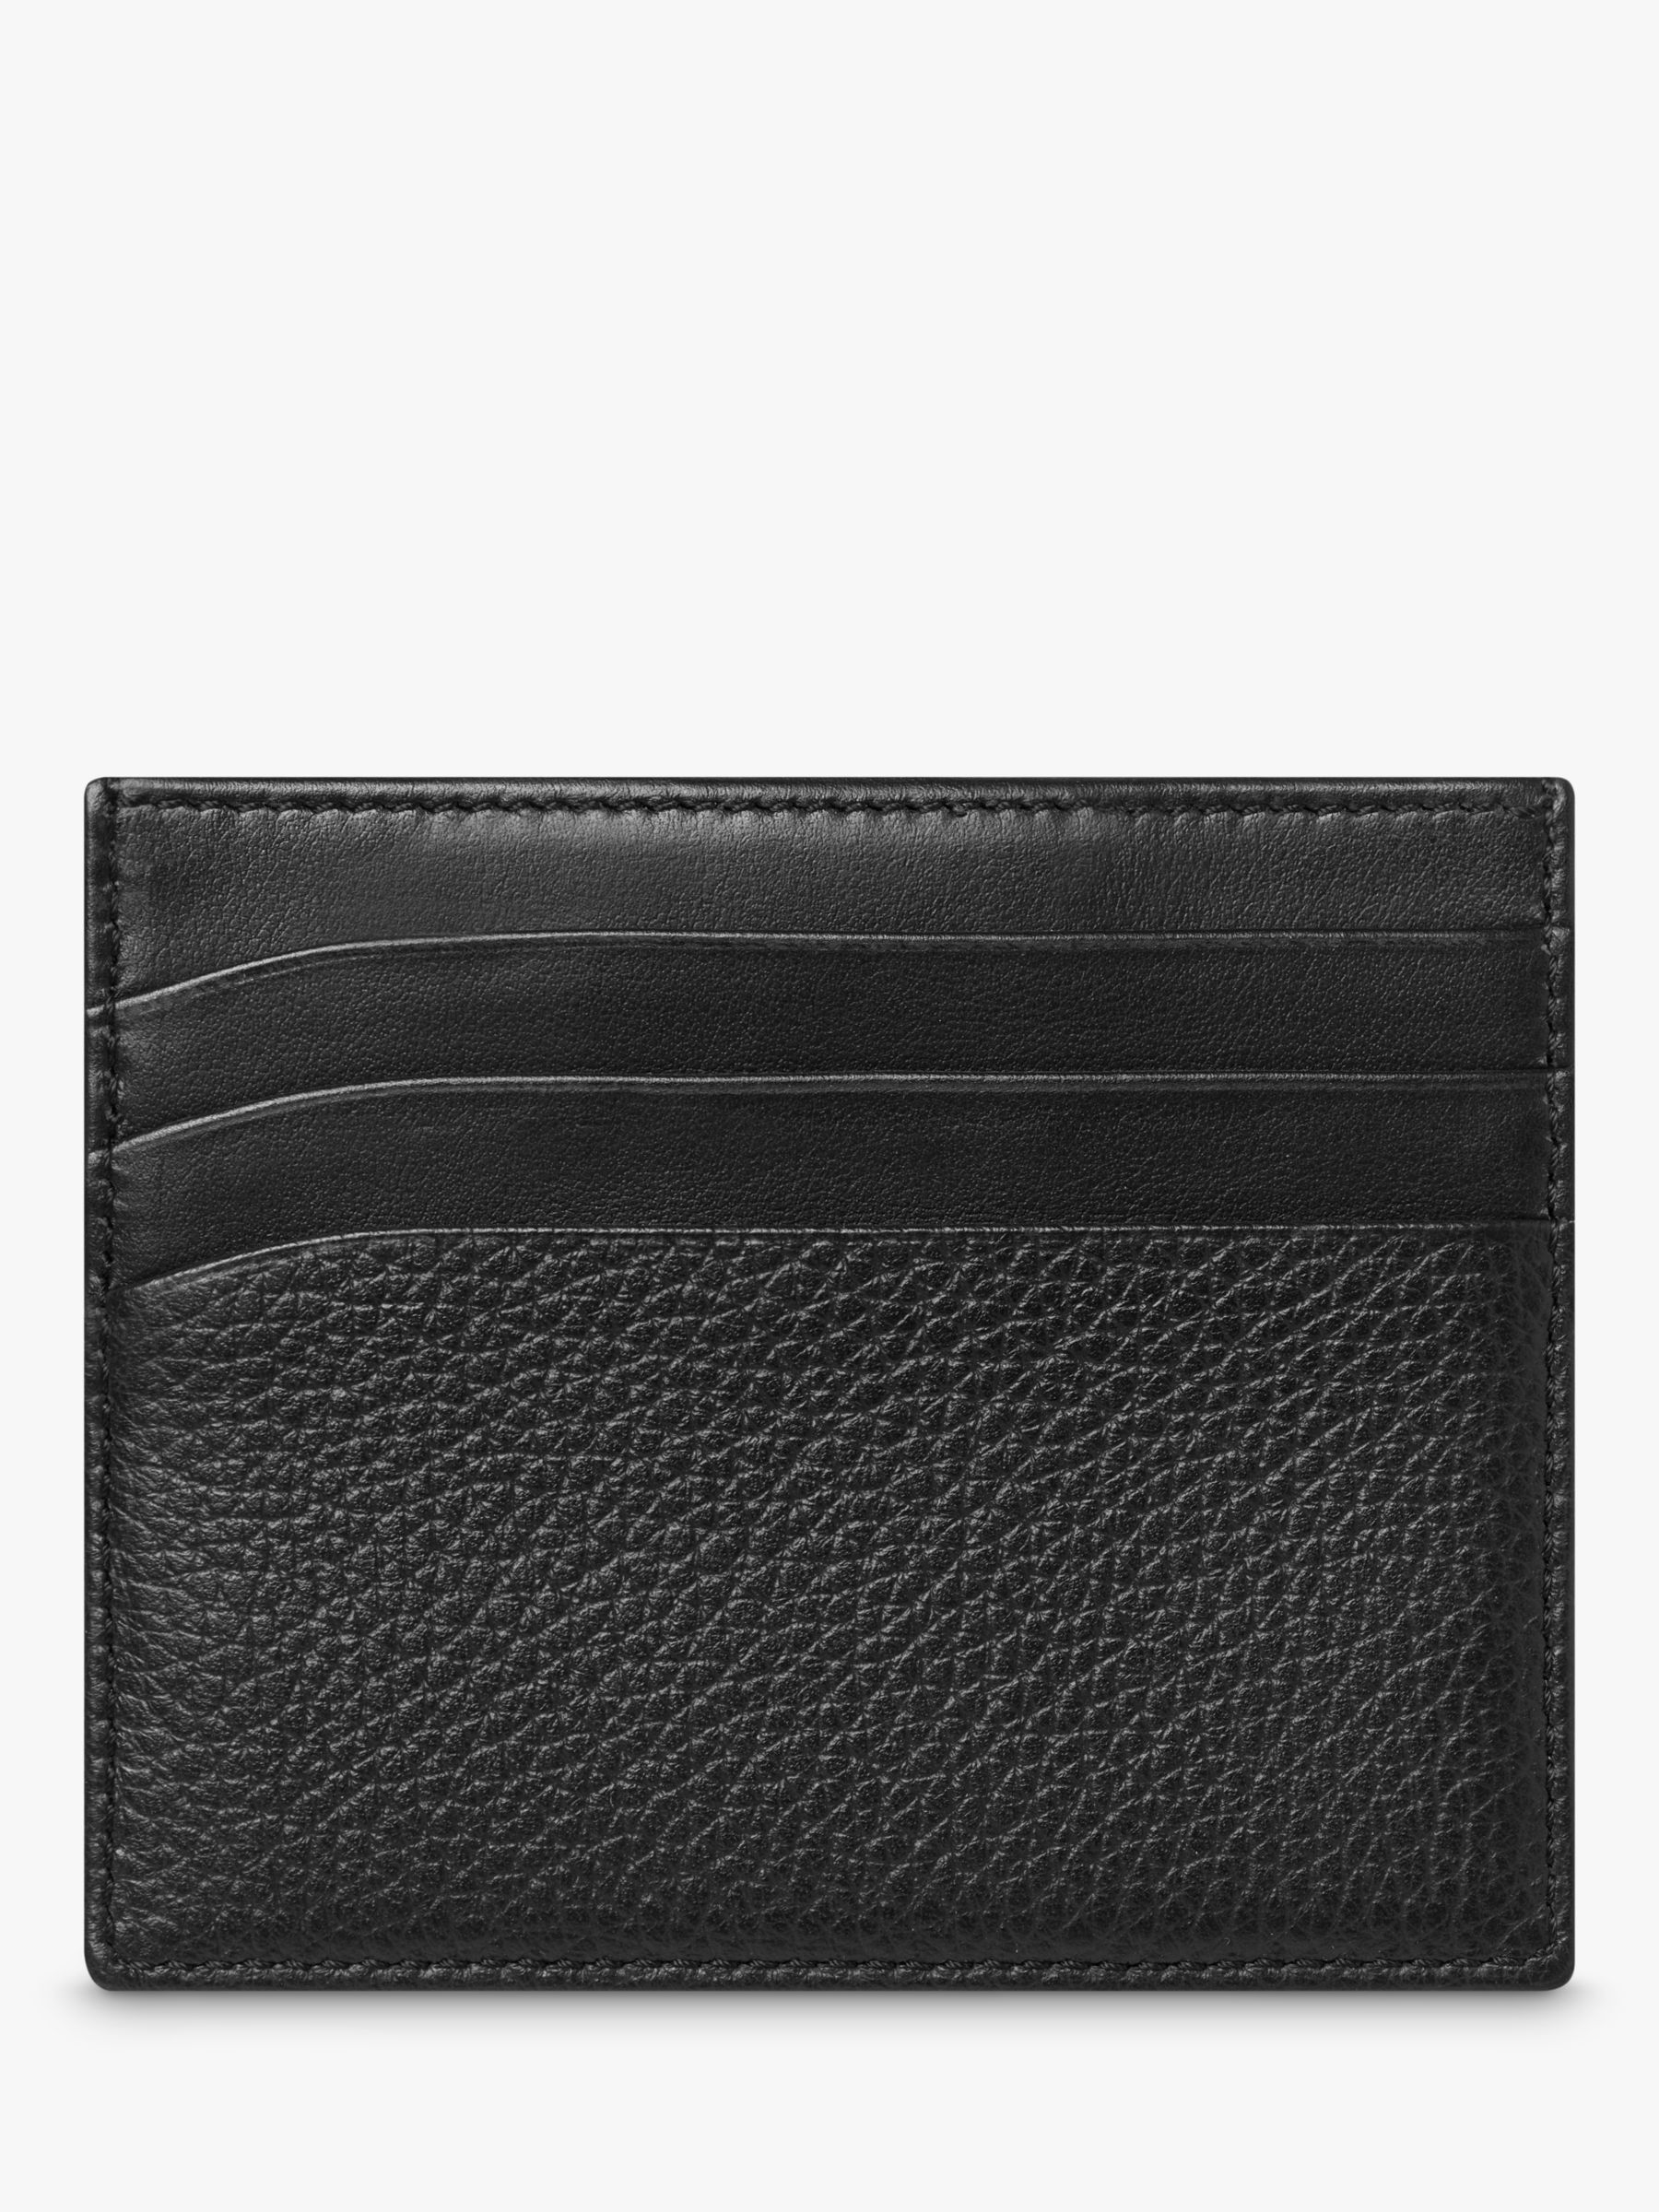 Montblanc 6 Card Leather Card Holder, Black at John Lewis & Partners